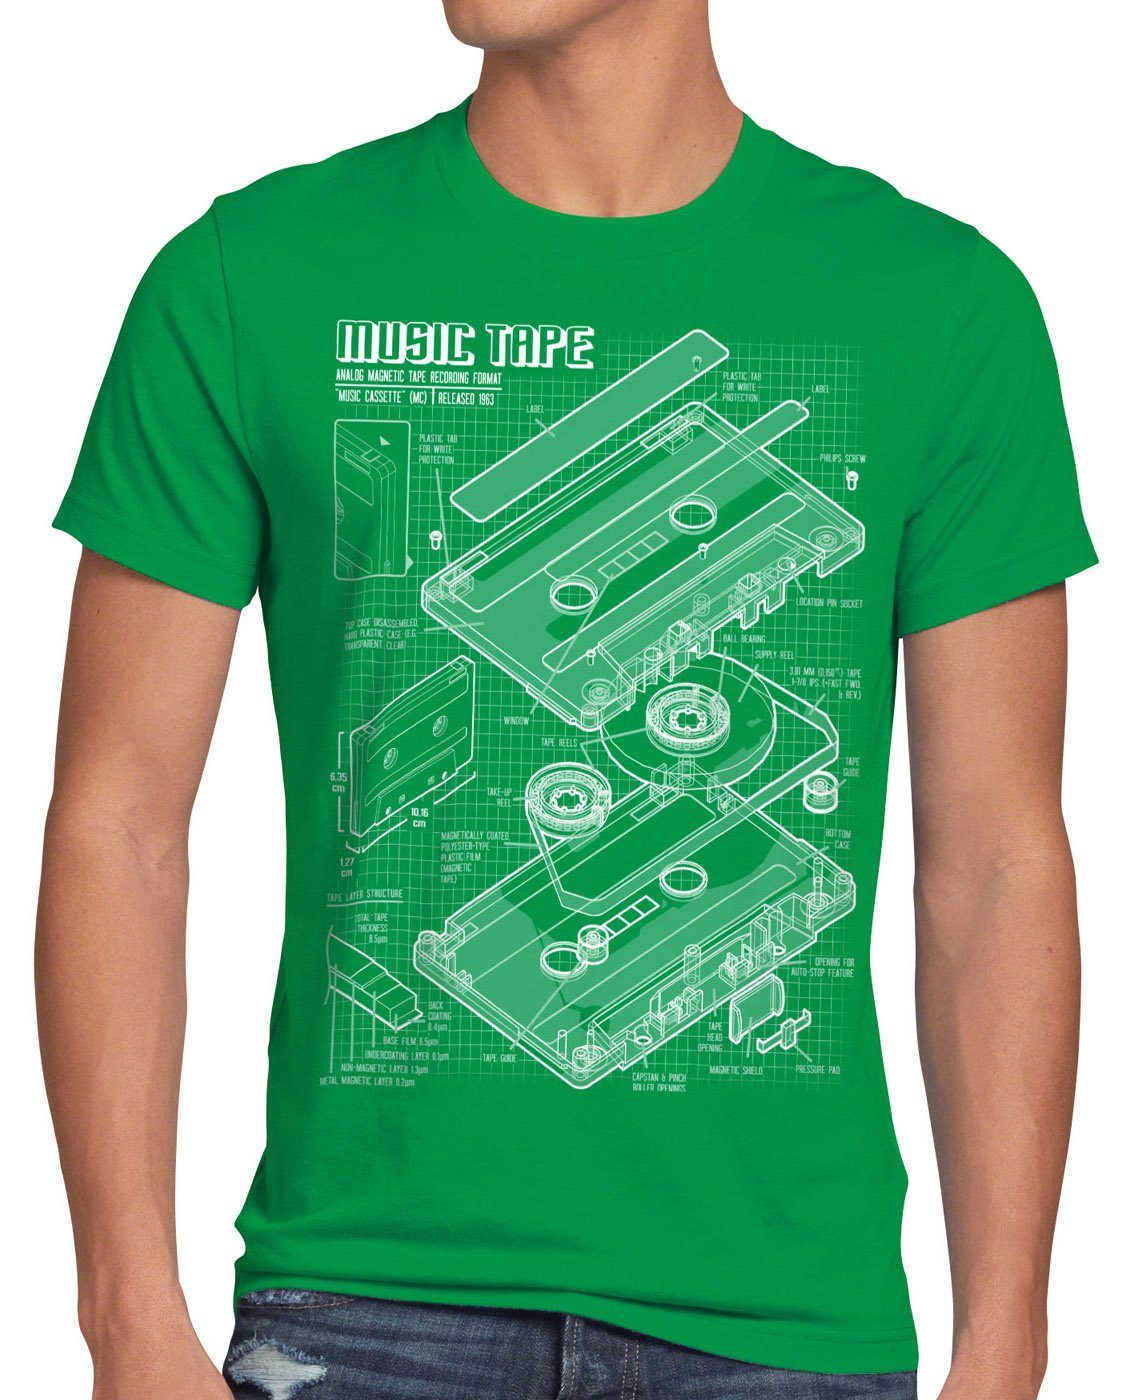 style3 Print-Shirt Herren T-Shirt analog TAPE musik disko Kassette retro MC grün disco ndw turntable DJ